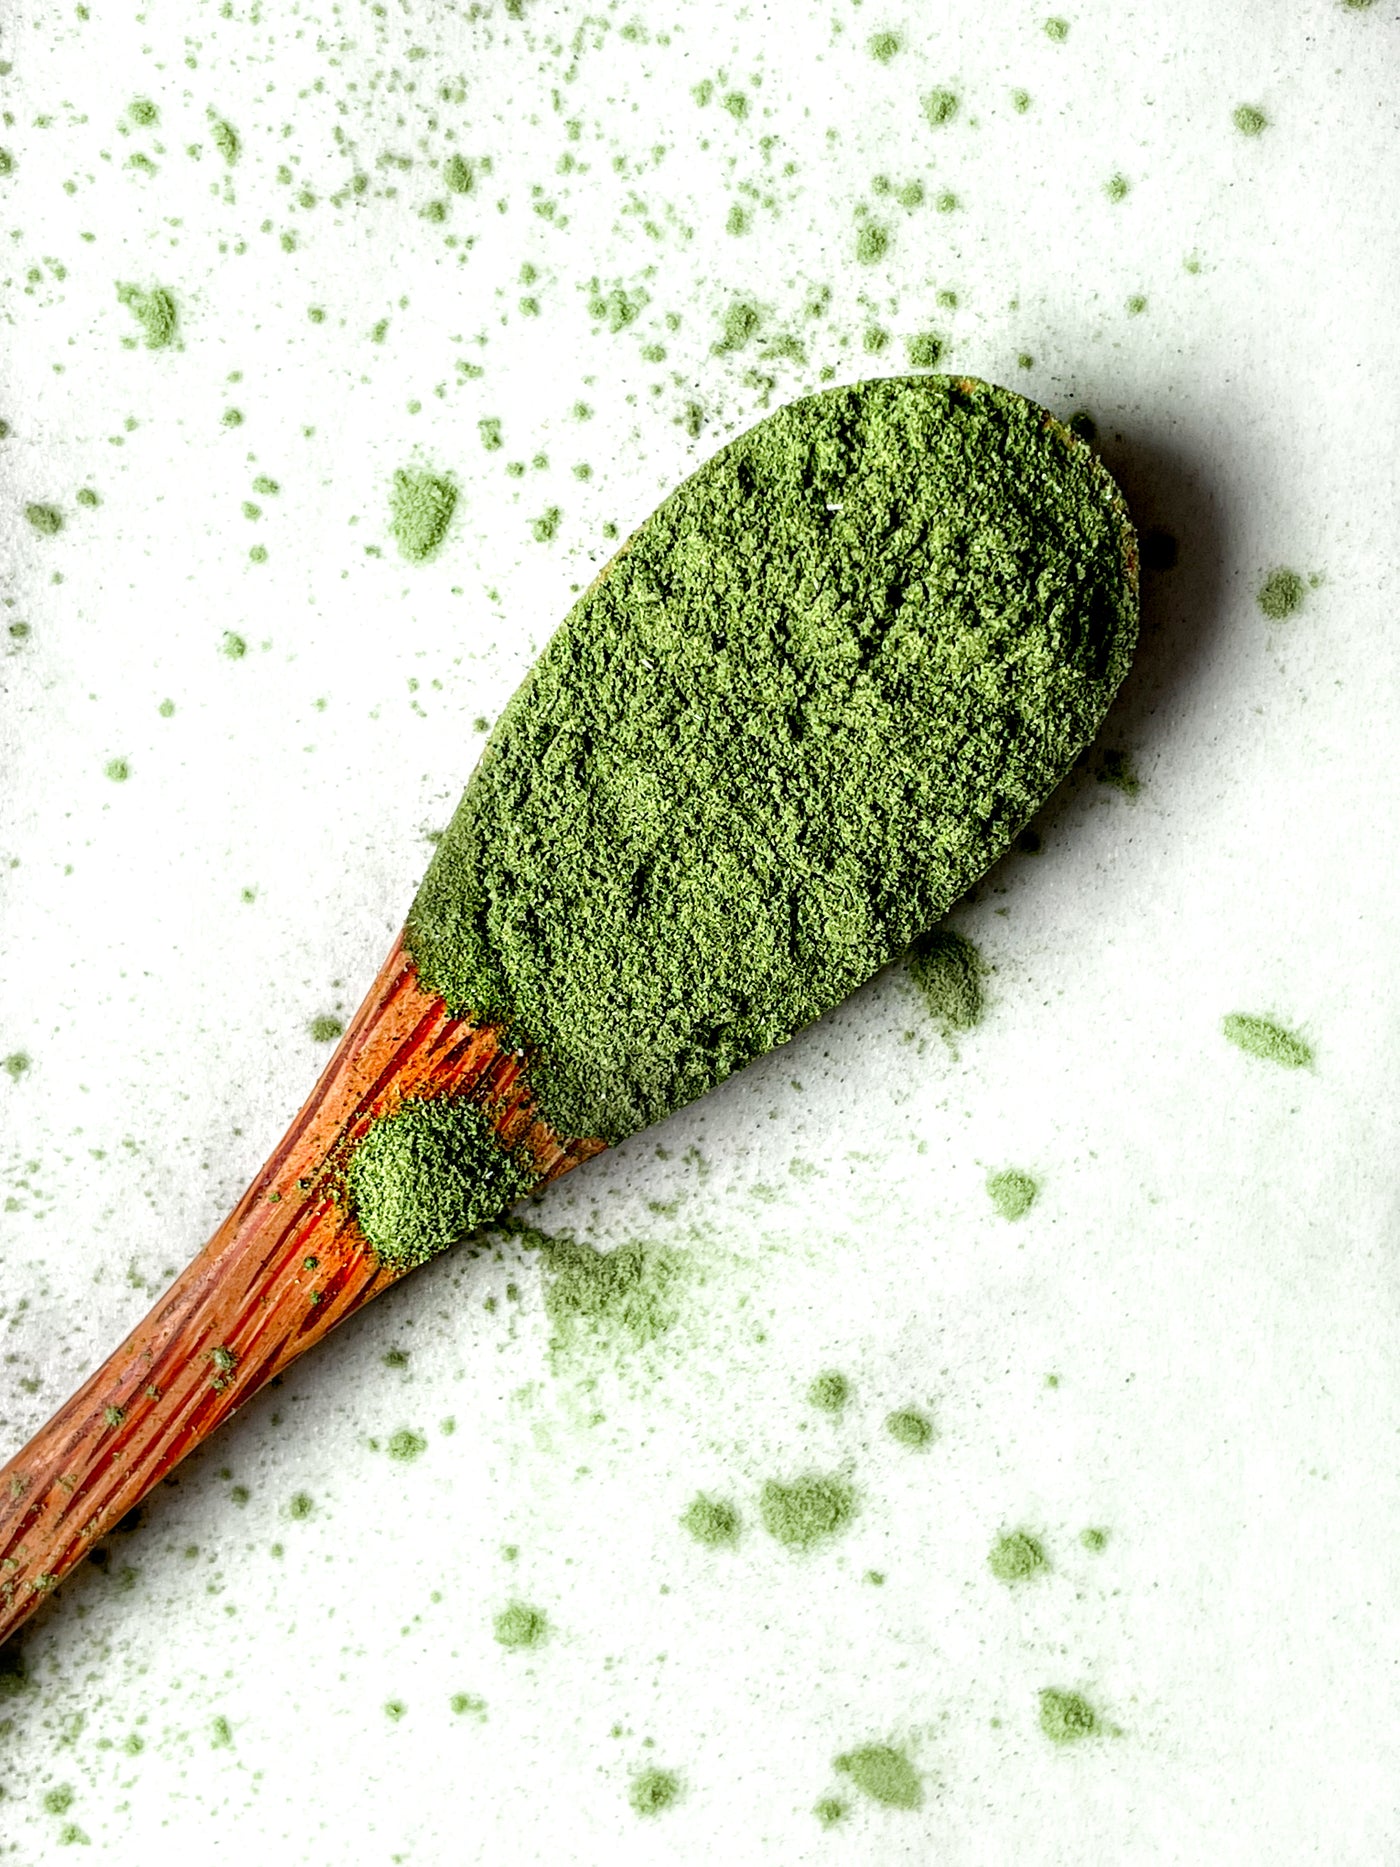 The Top 10 Benefits of Super Greens Powders